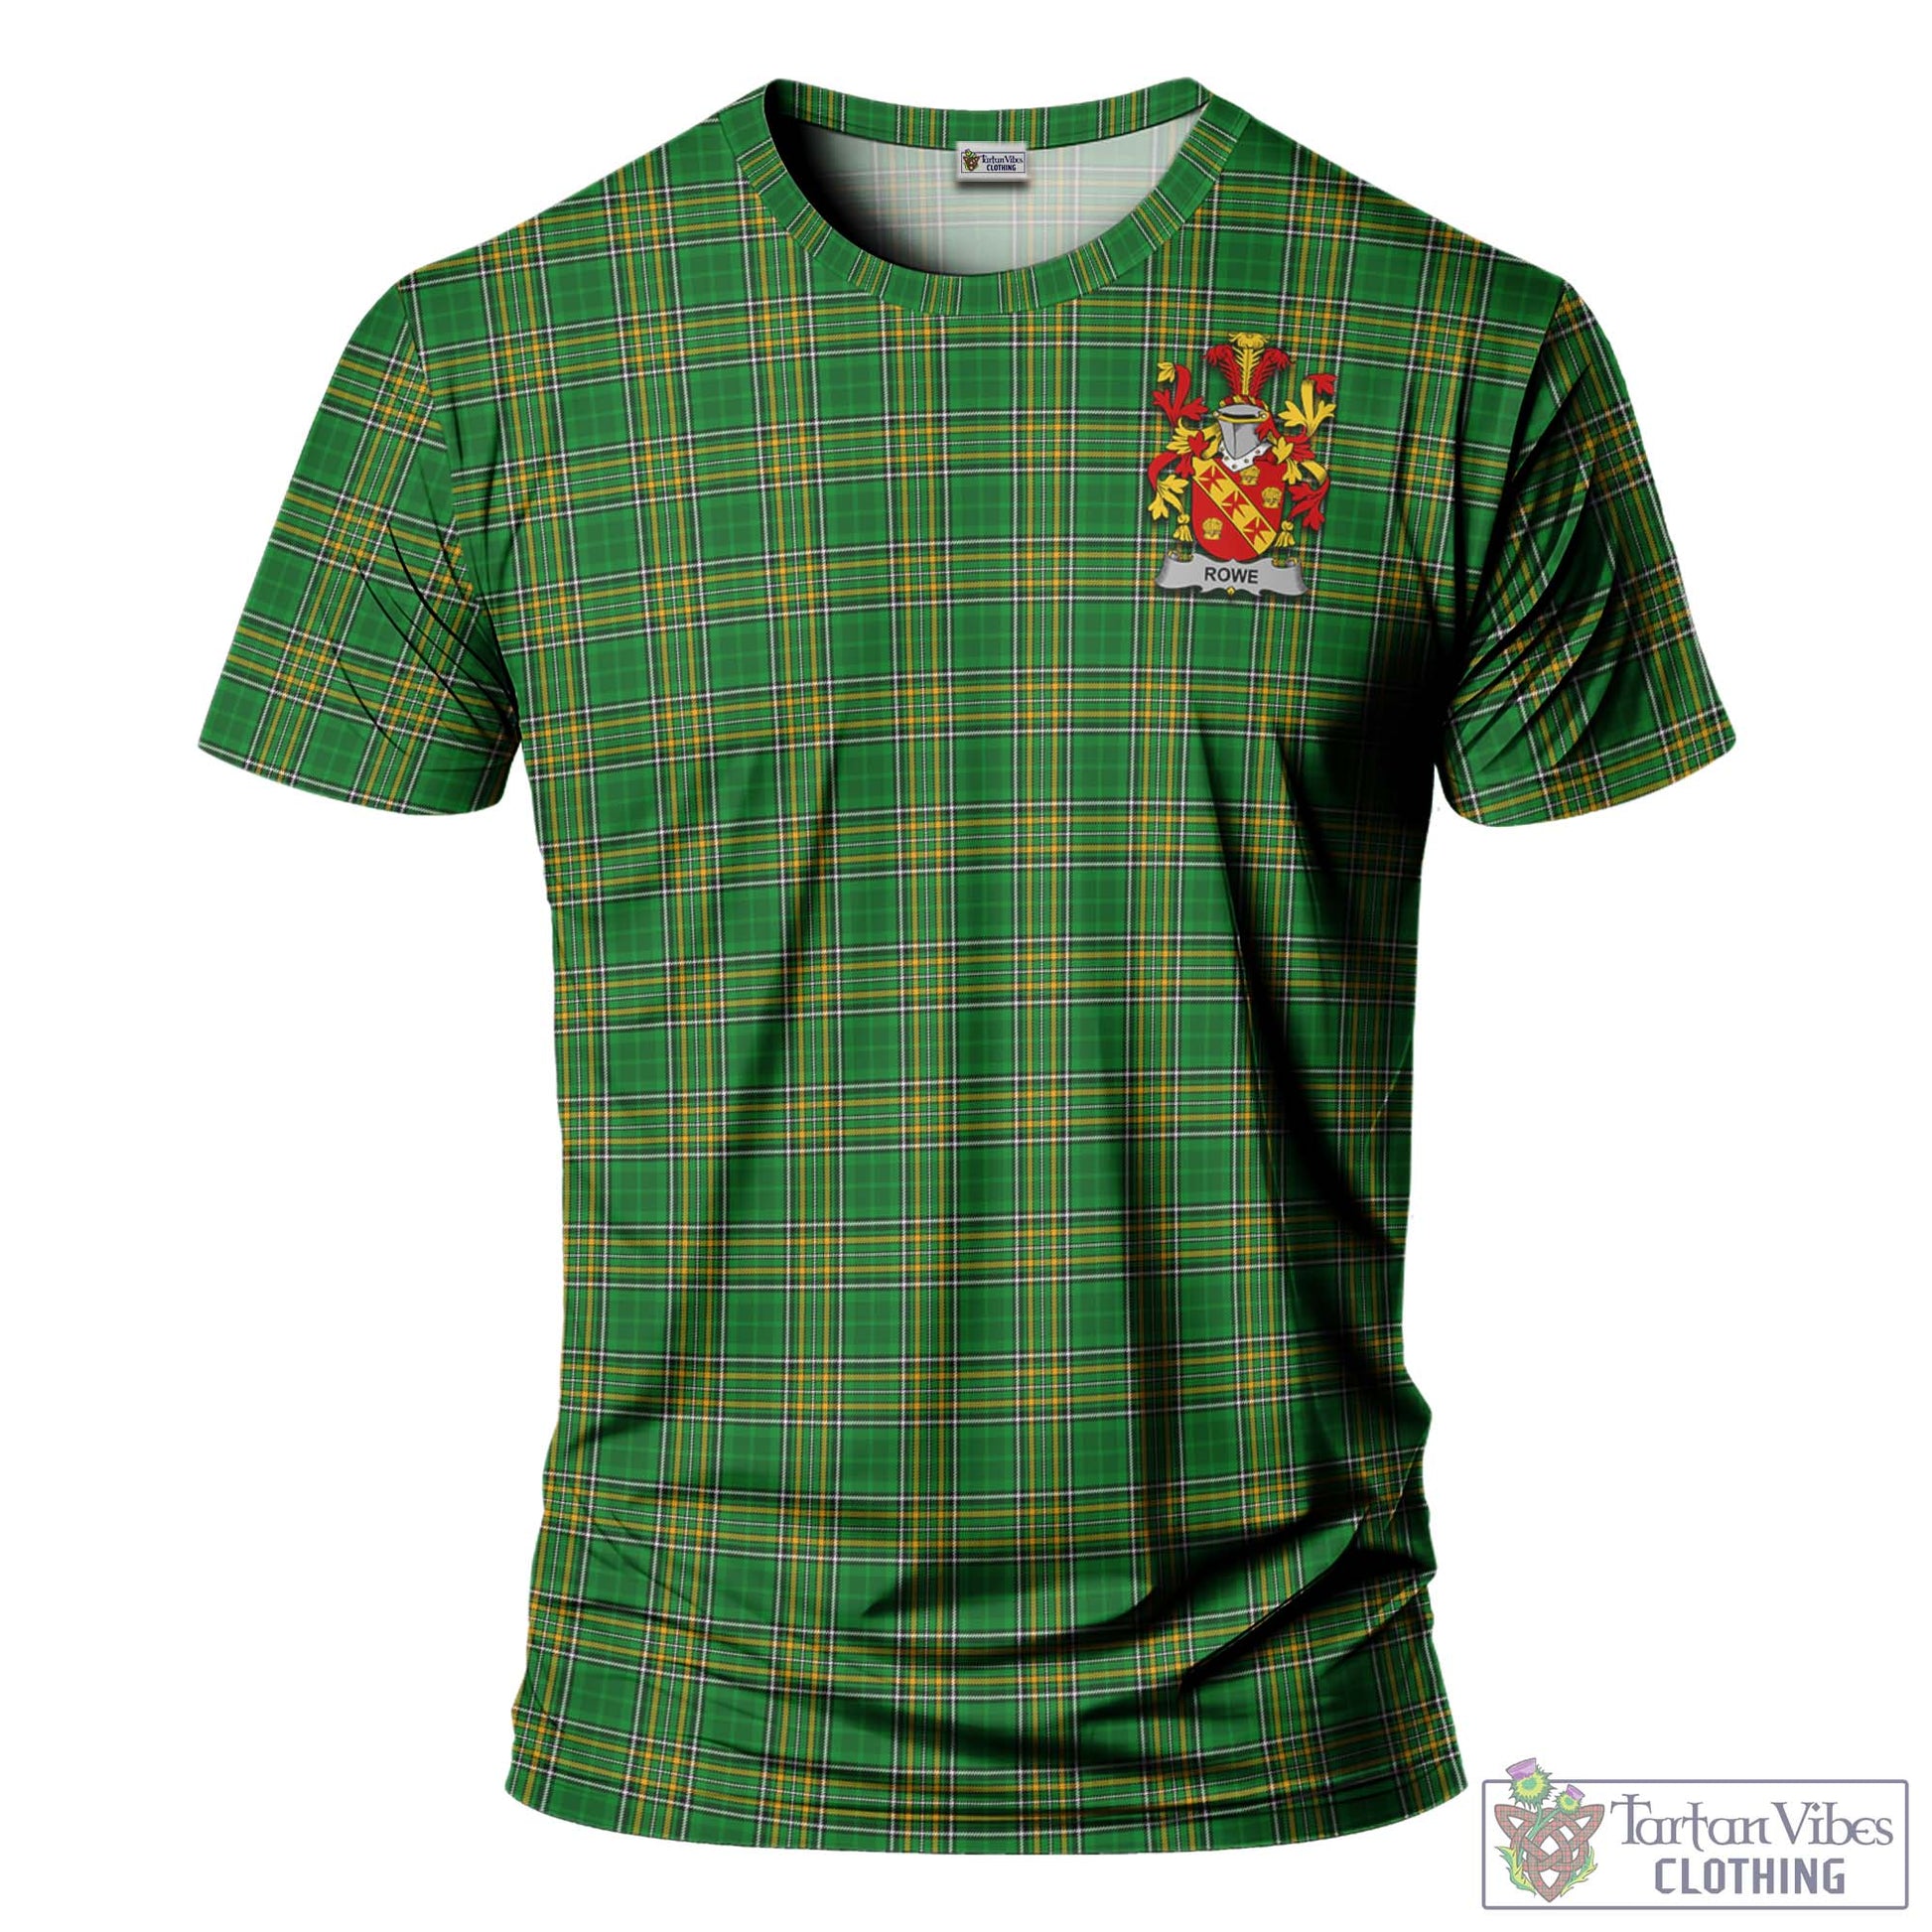 Tartan Vibes Clothing Rowe Ireland Clan Tartan T-Shirt with Family Seal